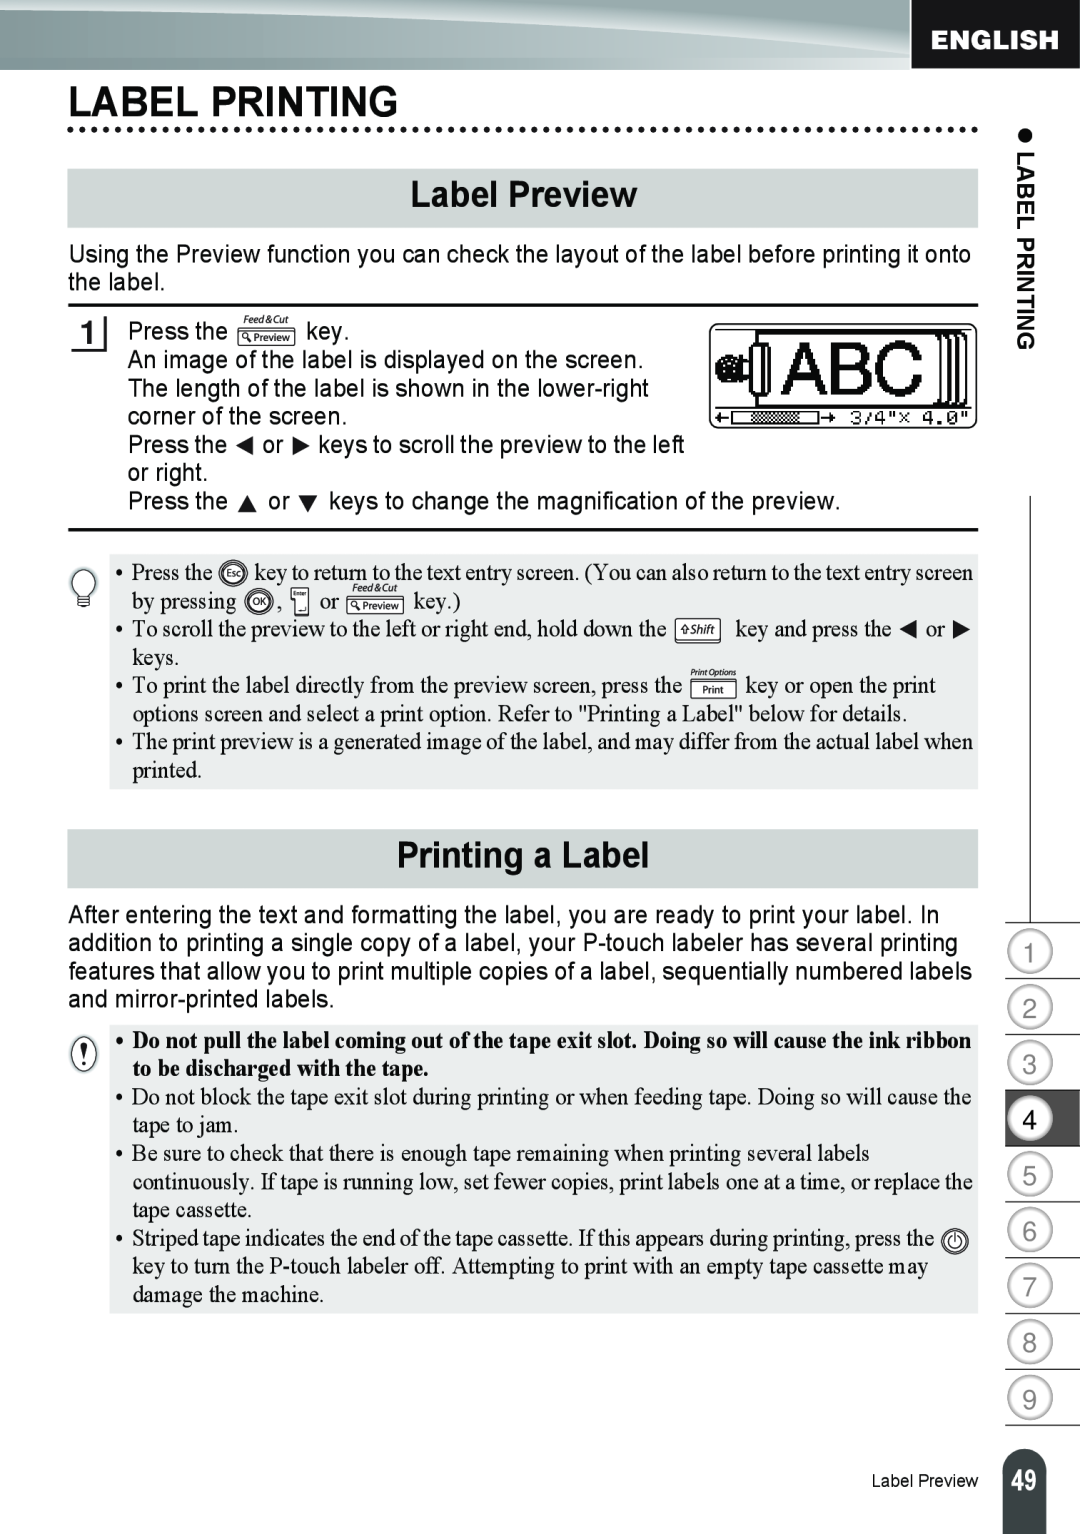 Brother PT-2100, PT-2110 manual Label Printing, Label Preview, Printing a Label, z LABEL PRINTING 